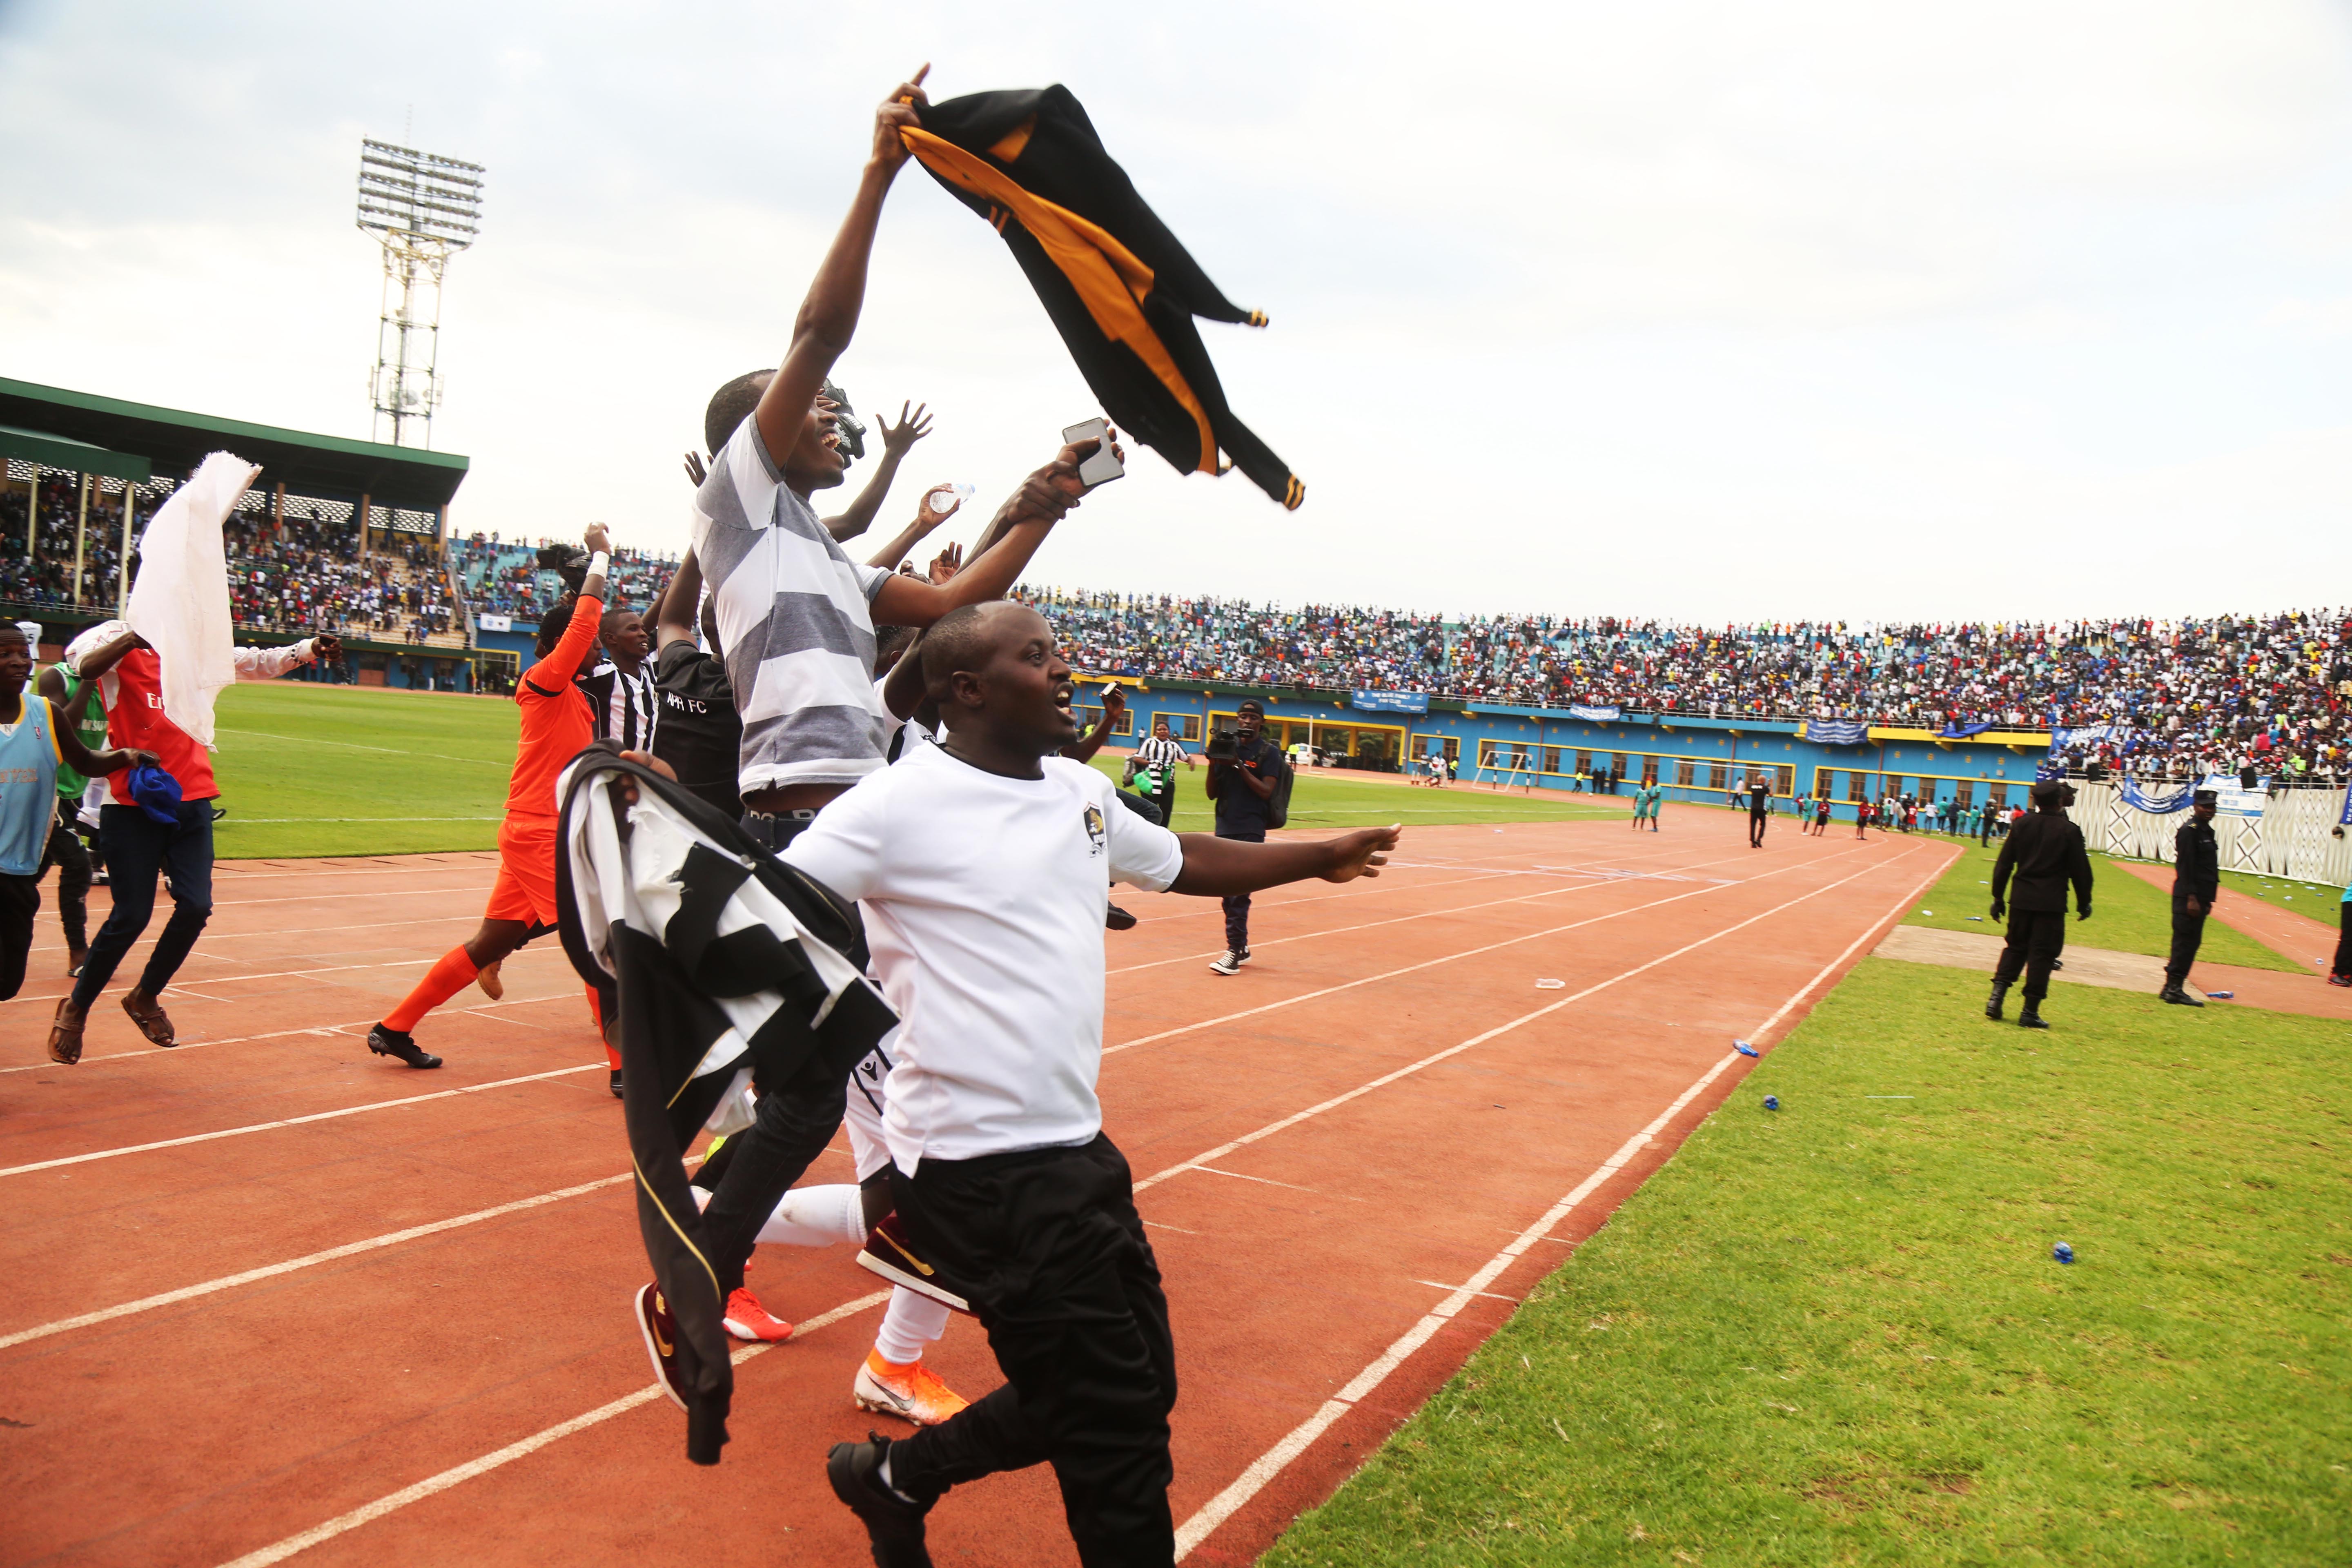 Players celebrate the first goal. / Sam Ngendahimana